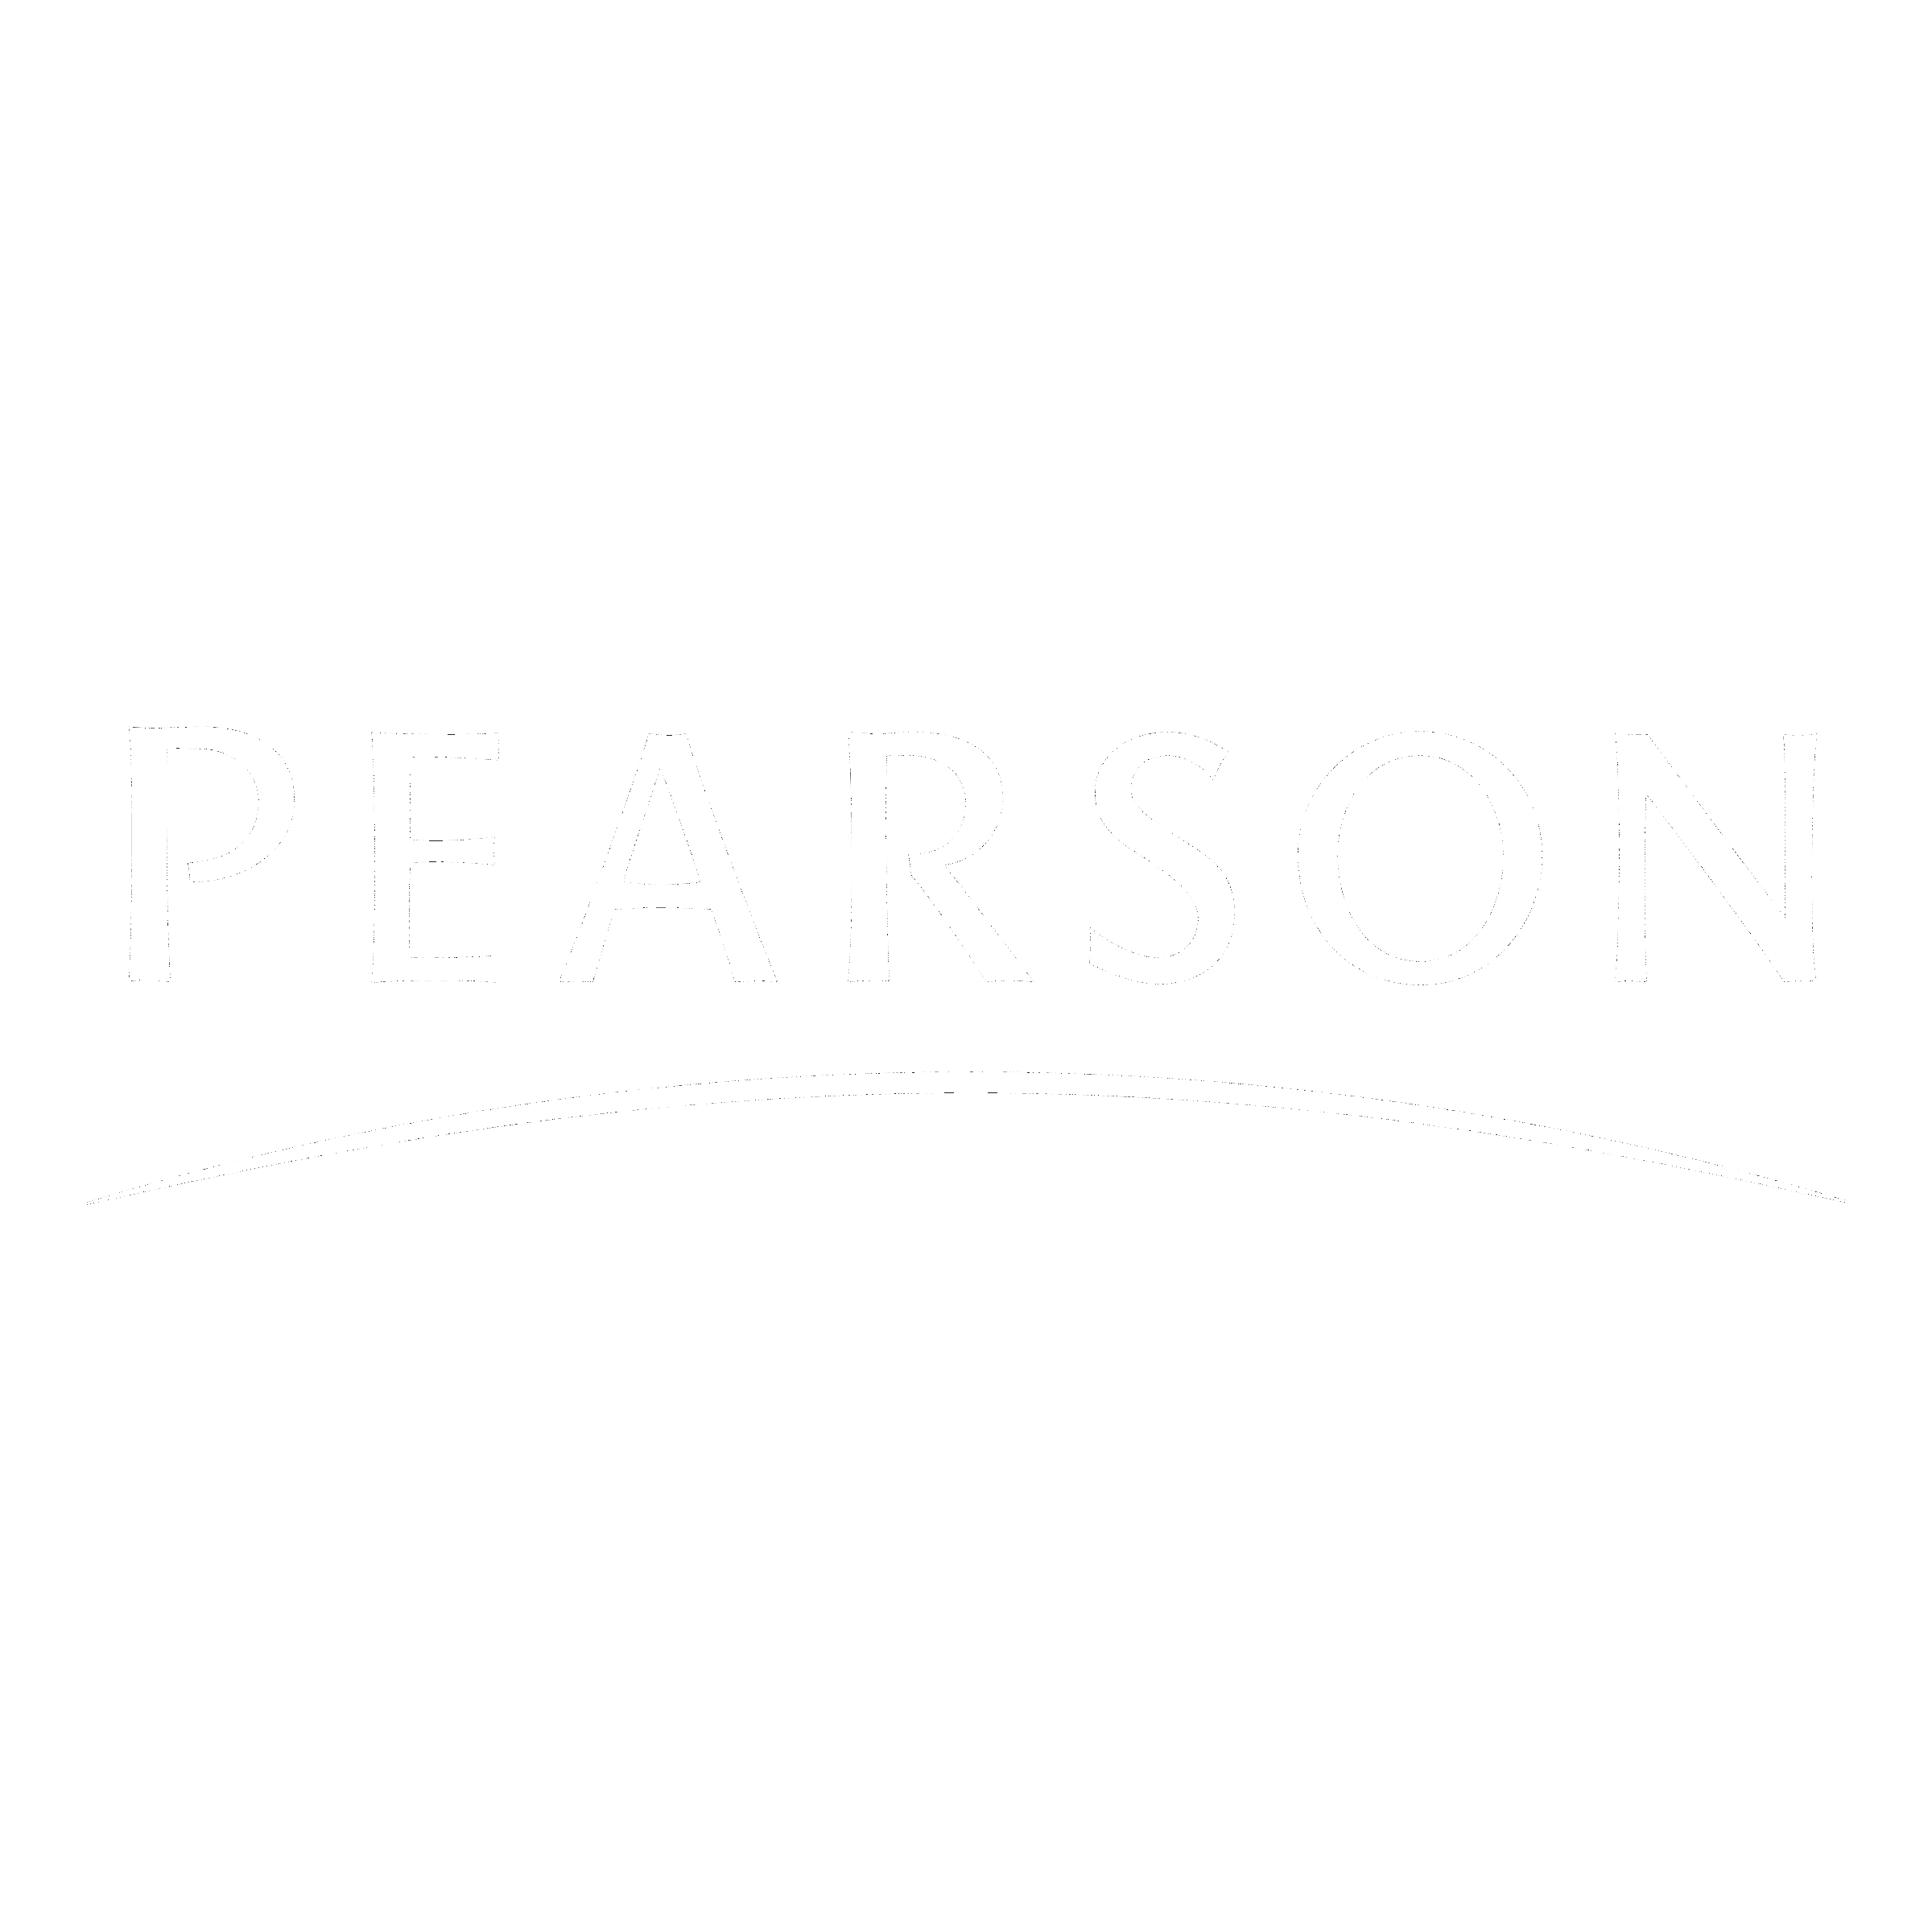 Pearson's Logo - Pearson Logo PNG Transparent & SVG Vector